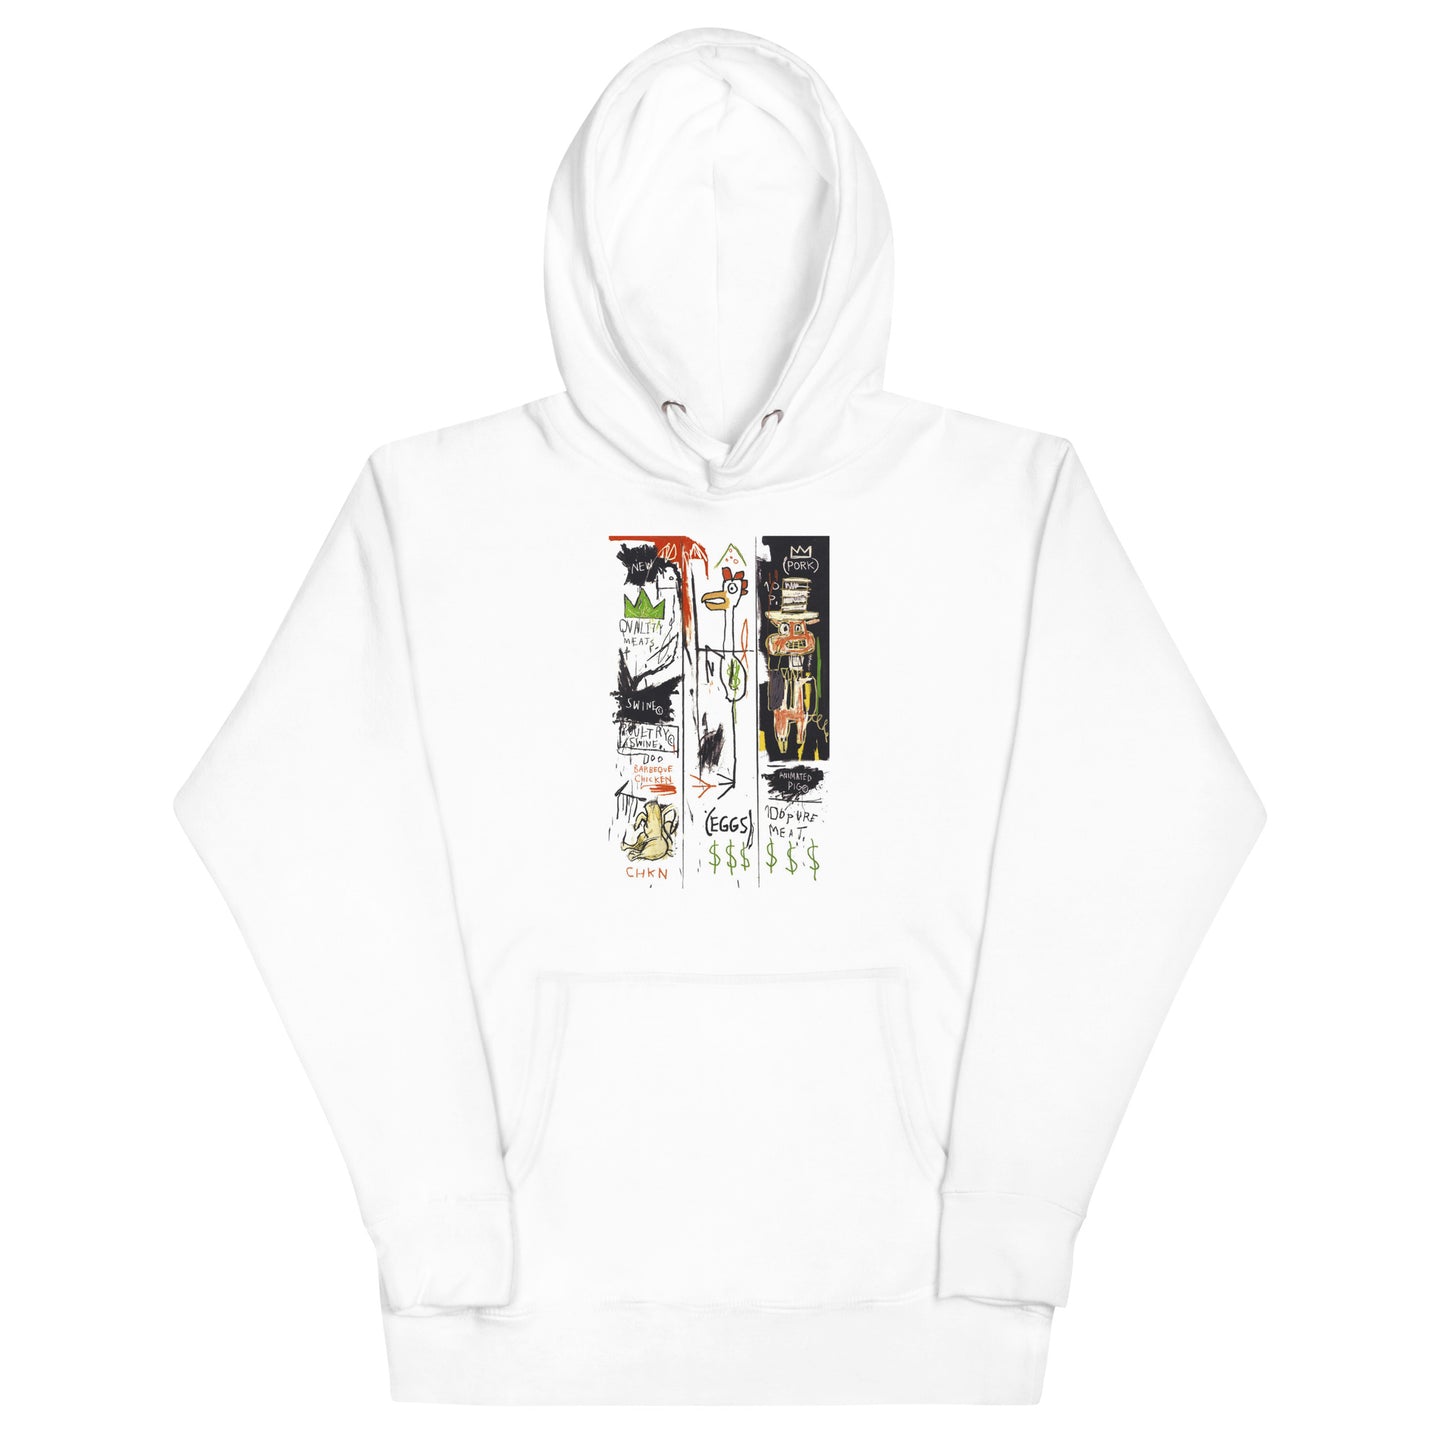 Jean-Michel Basquiat "Quality Meats for the Public" 1982 Artwork Printed Premium Streetwear Sweatshirt Hoodie White